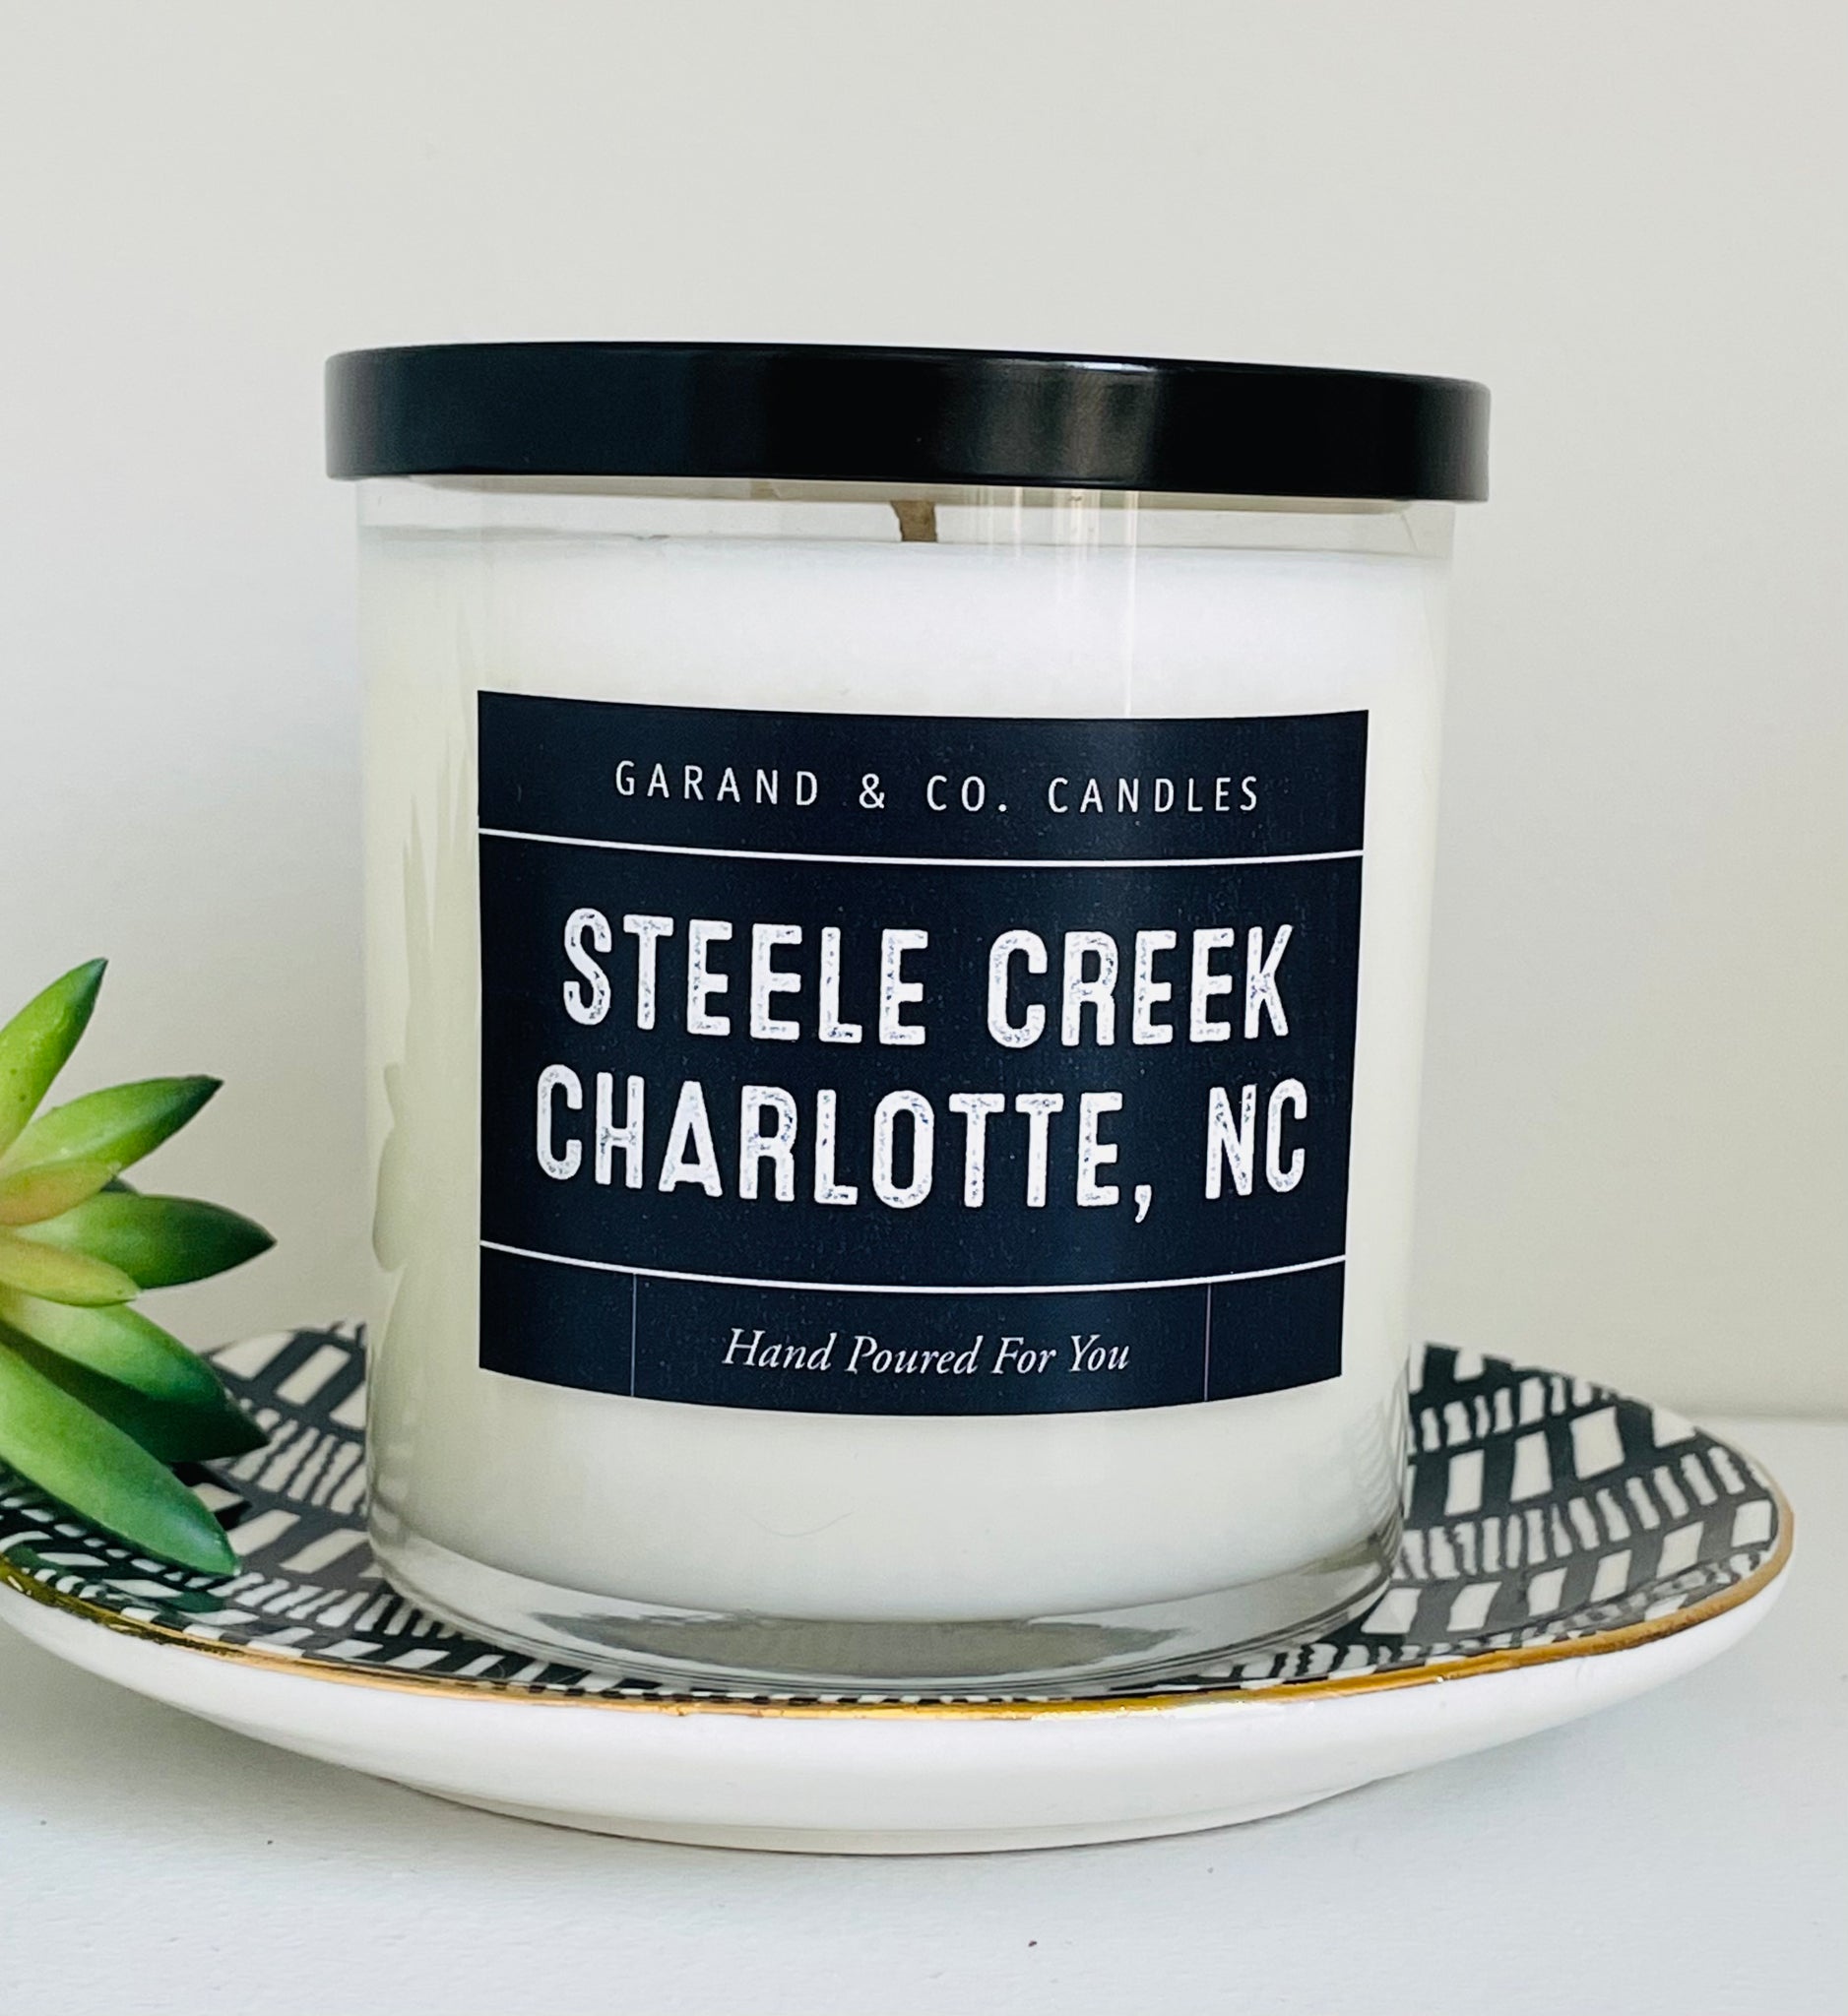 12 oz Clear Glass Jar Candle - Steele Creek Charlotte, NC